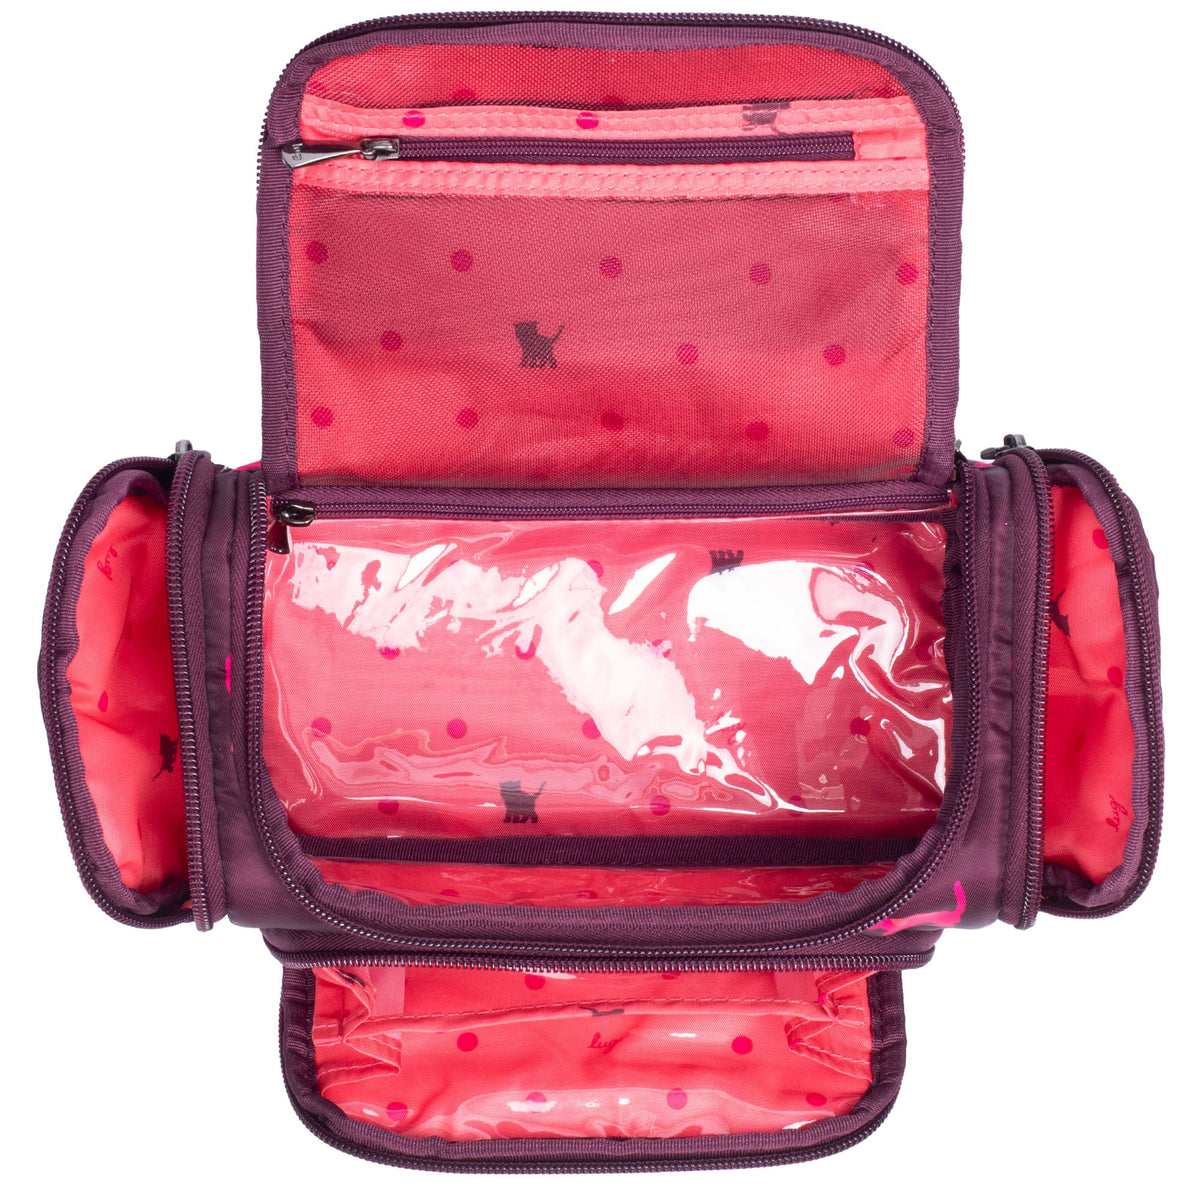 Trolley Mini Cosmetic Case